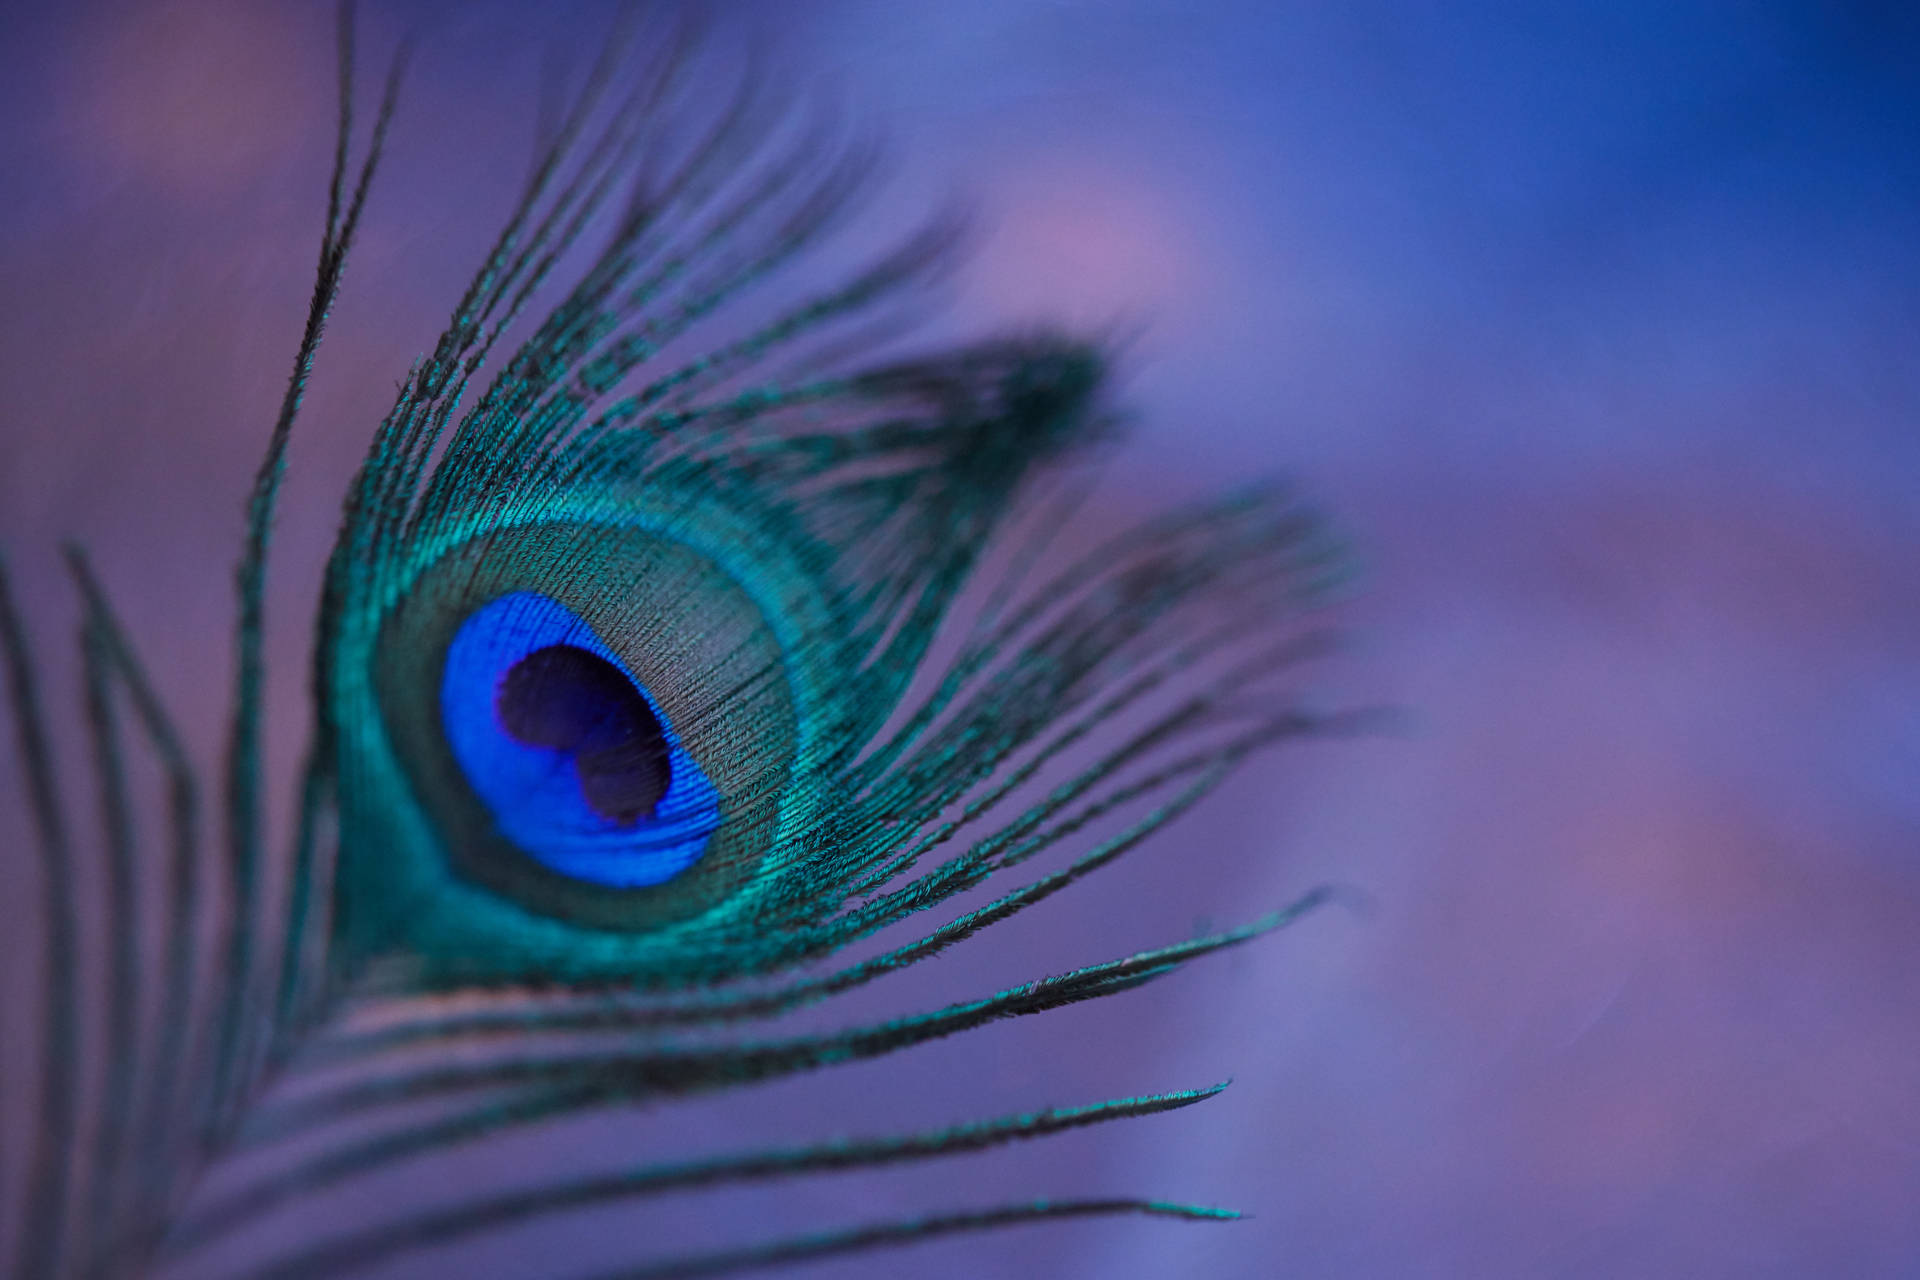 Focus Photography Of Peacock's Eye Spot Wallpaper